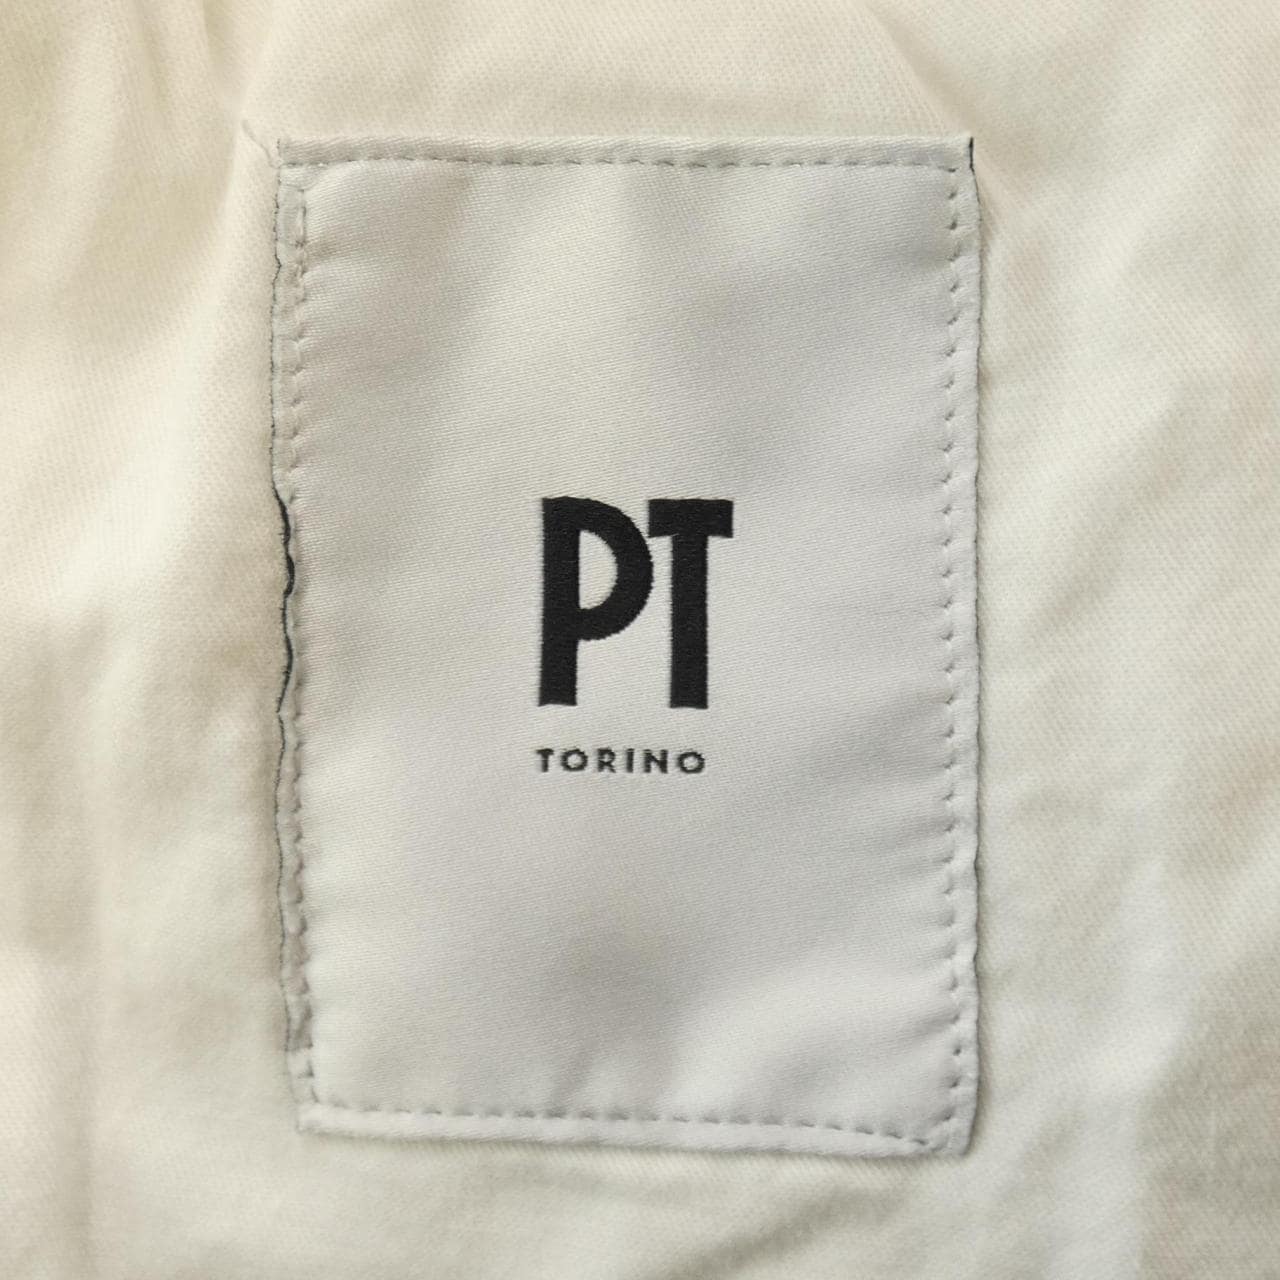 PETY TRINO PT TORINO短裤